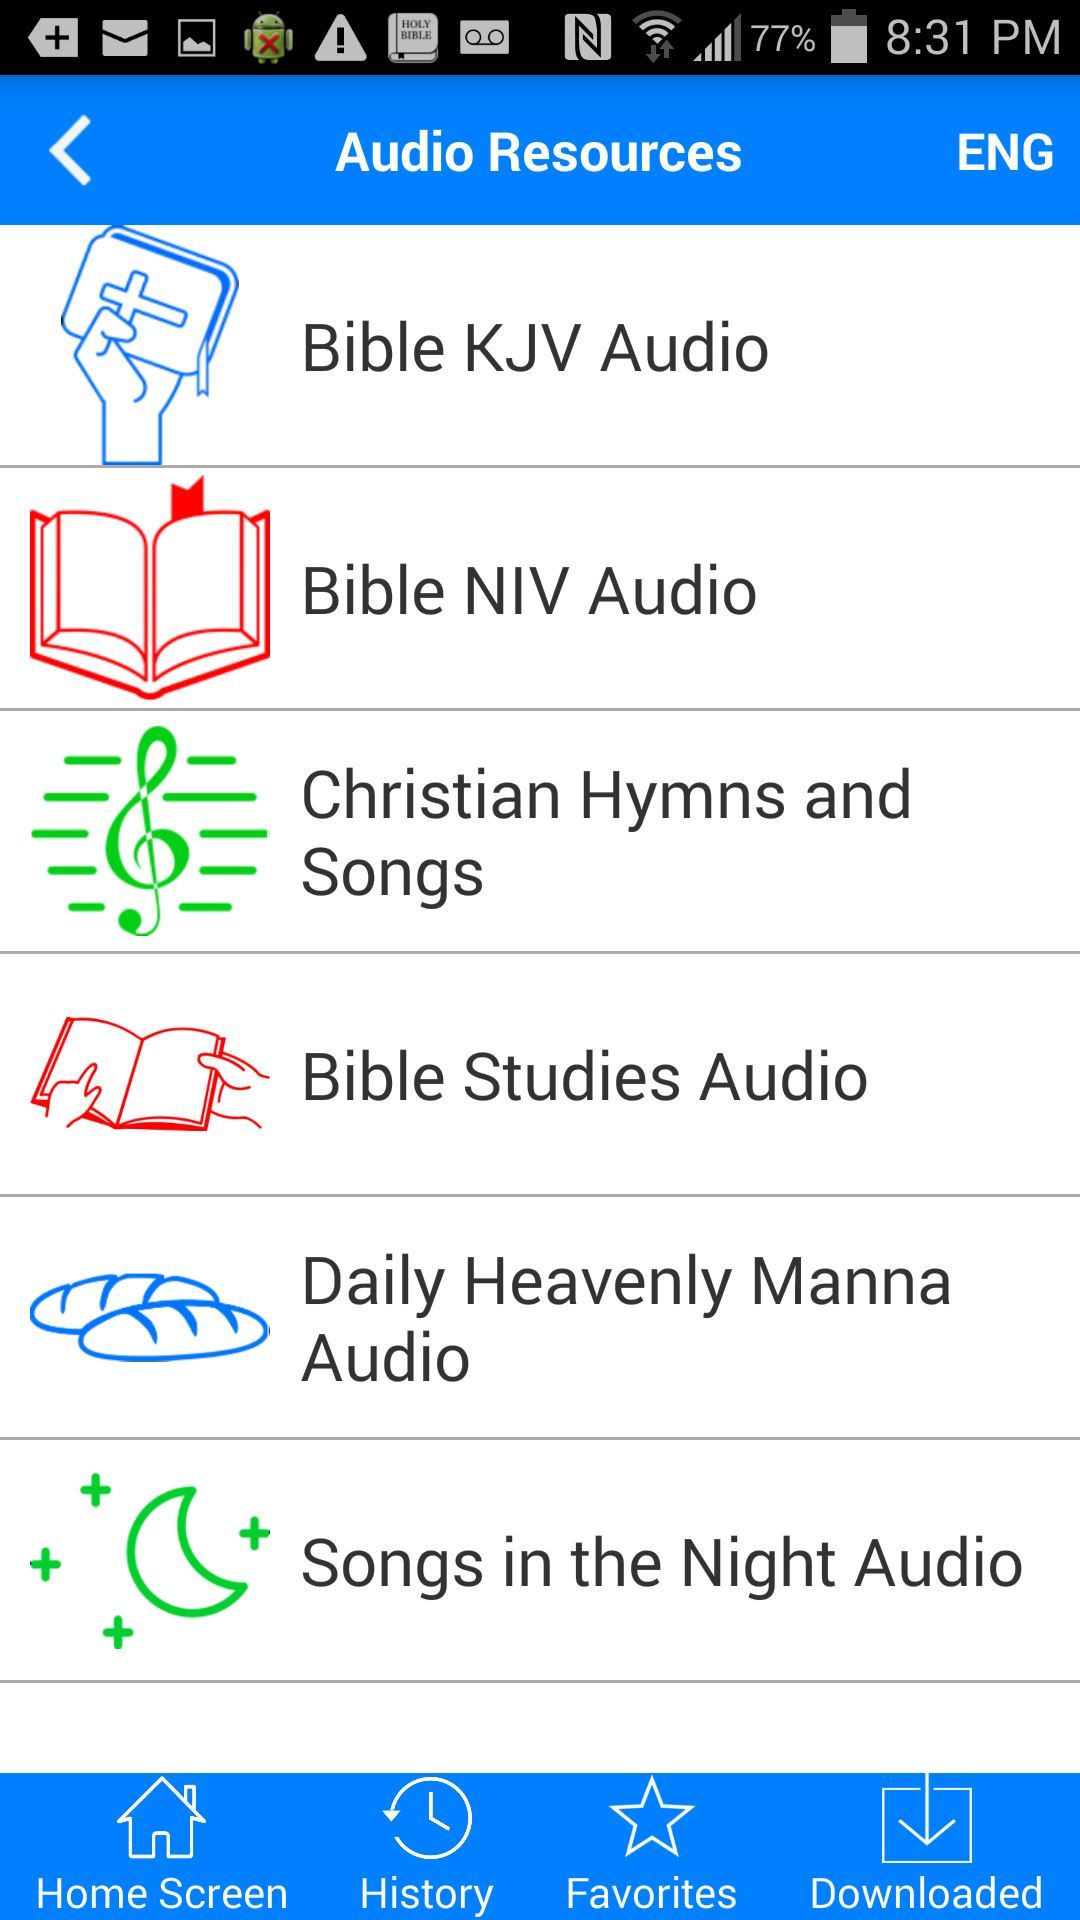 Bible Study Tools, Bibles, Commentaries, Studies, Audio, Video